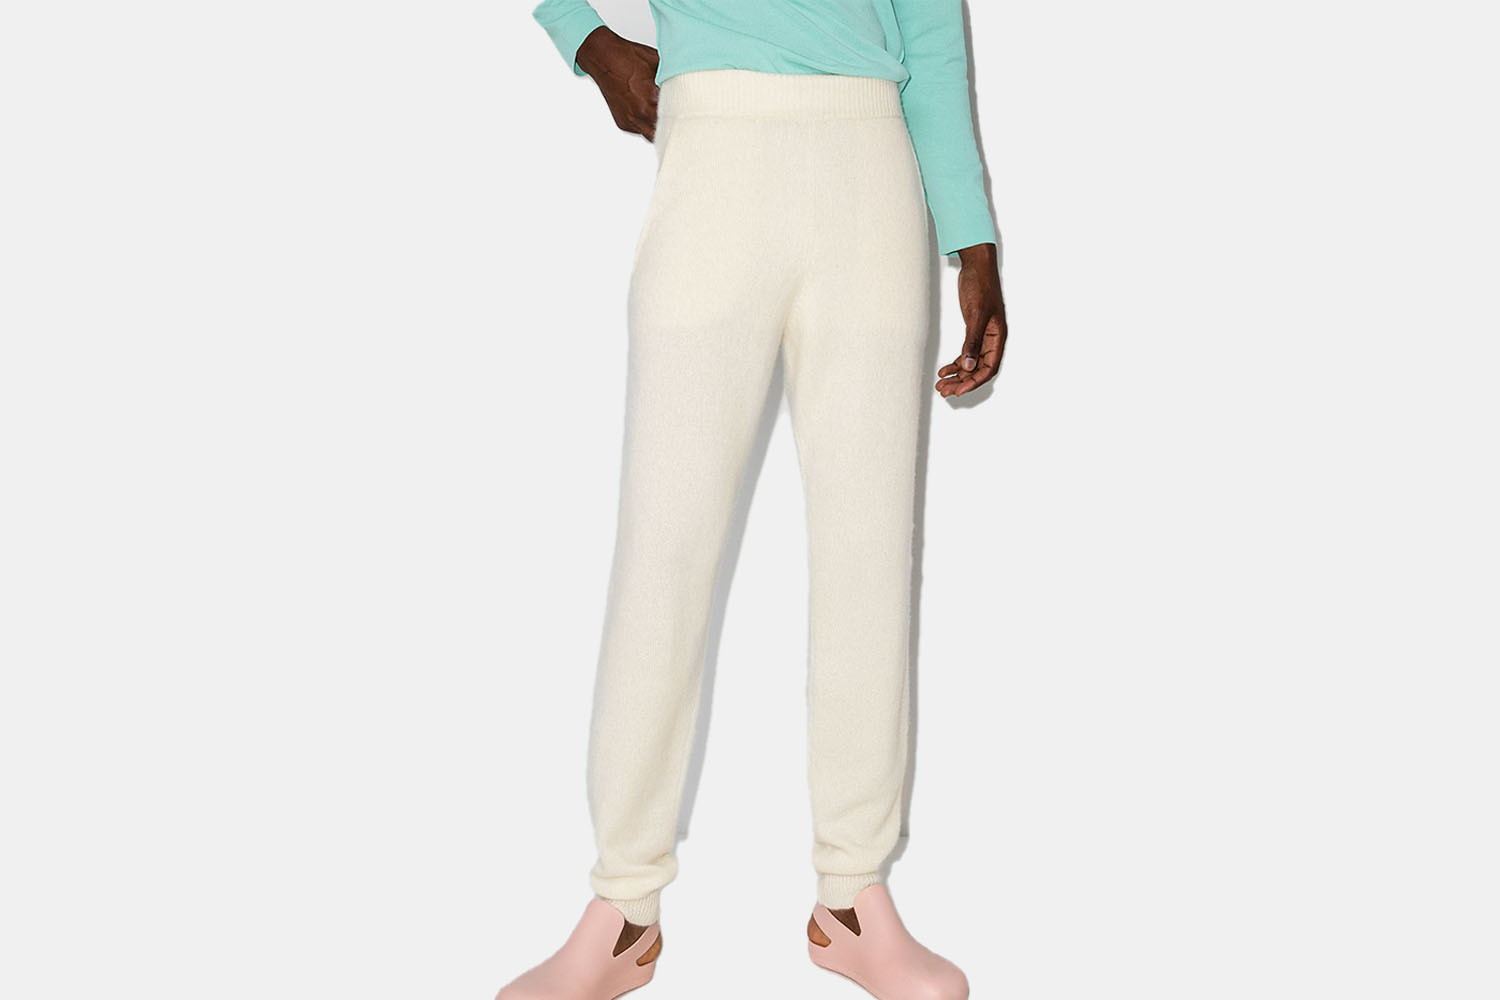 a model in some white-cream sweatpants 